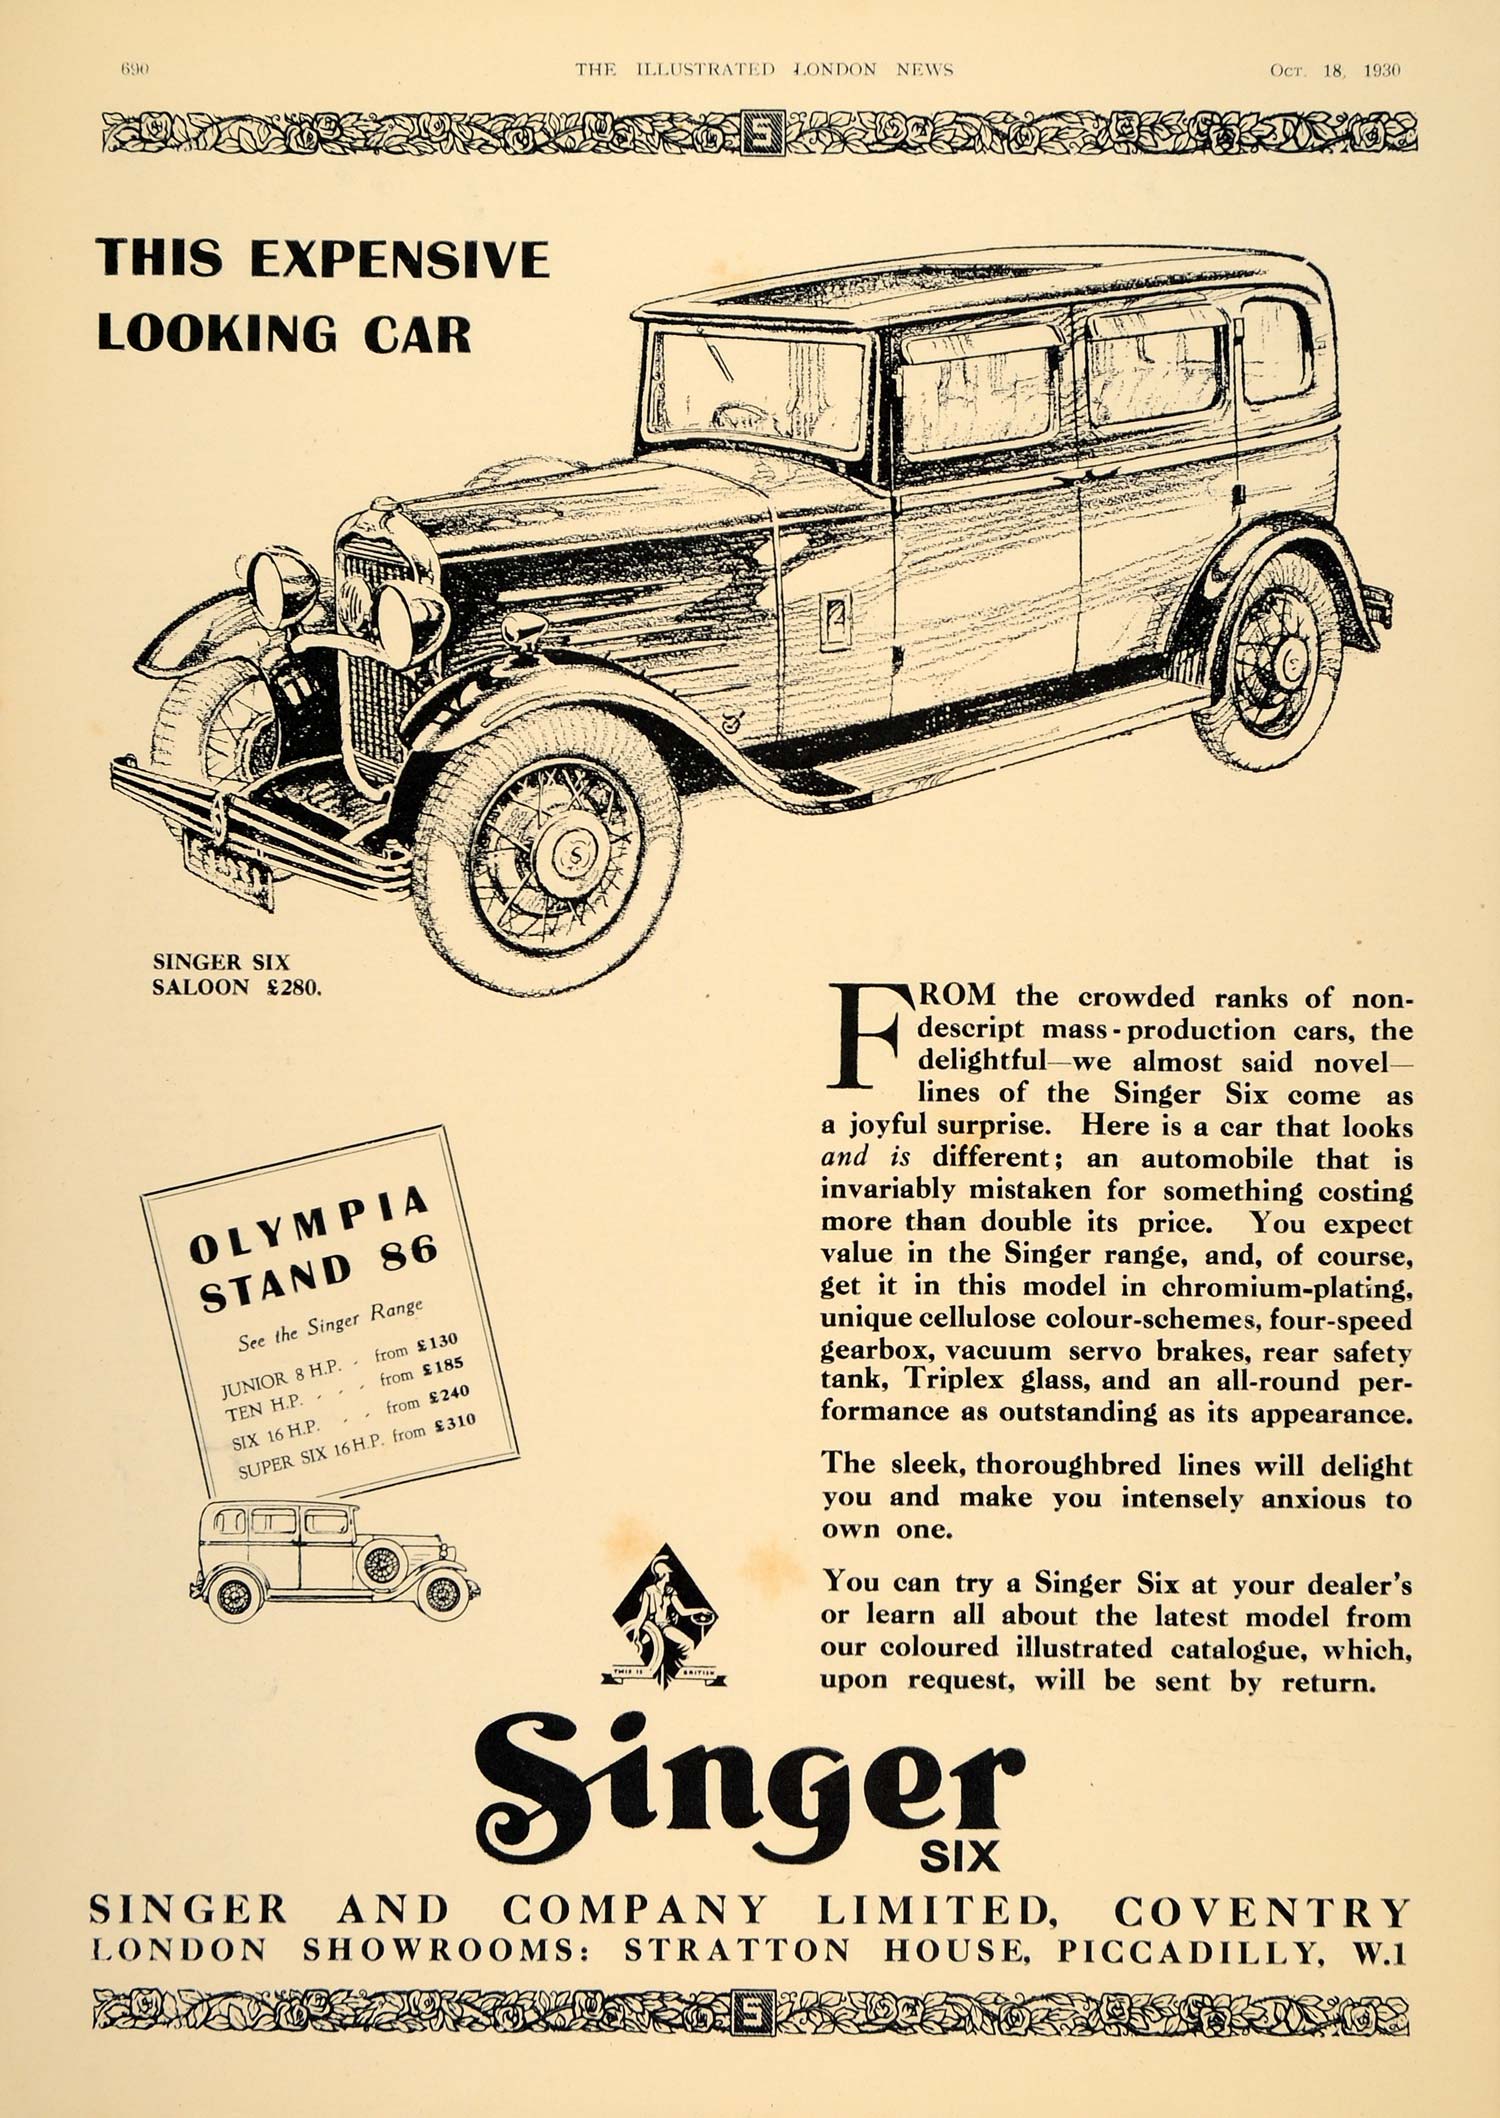 1930 Ad Vintage Singer Six Saloon British Car Antique - ORIGINAL ADVERTISING LN1